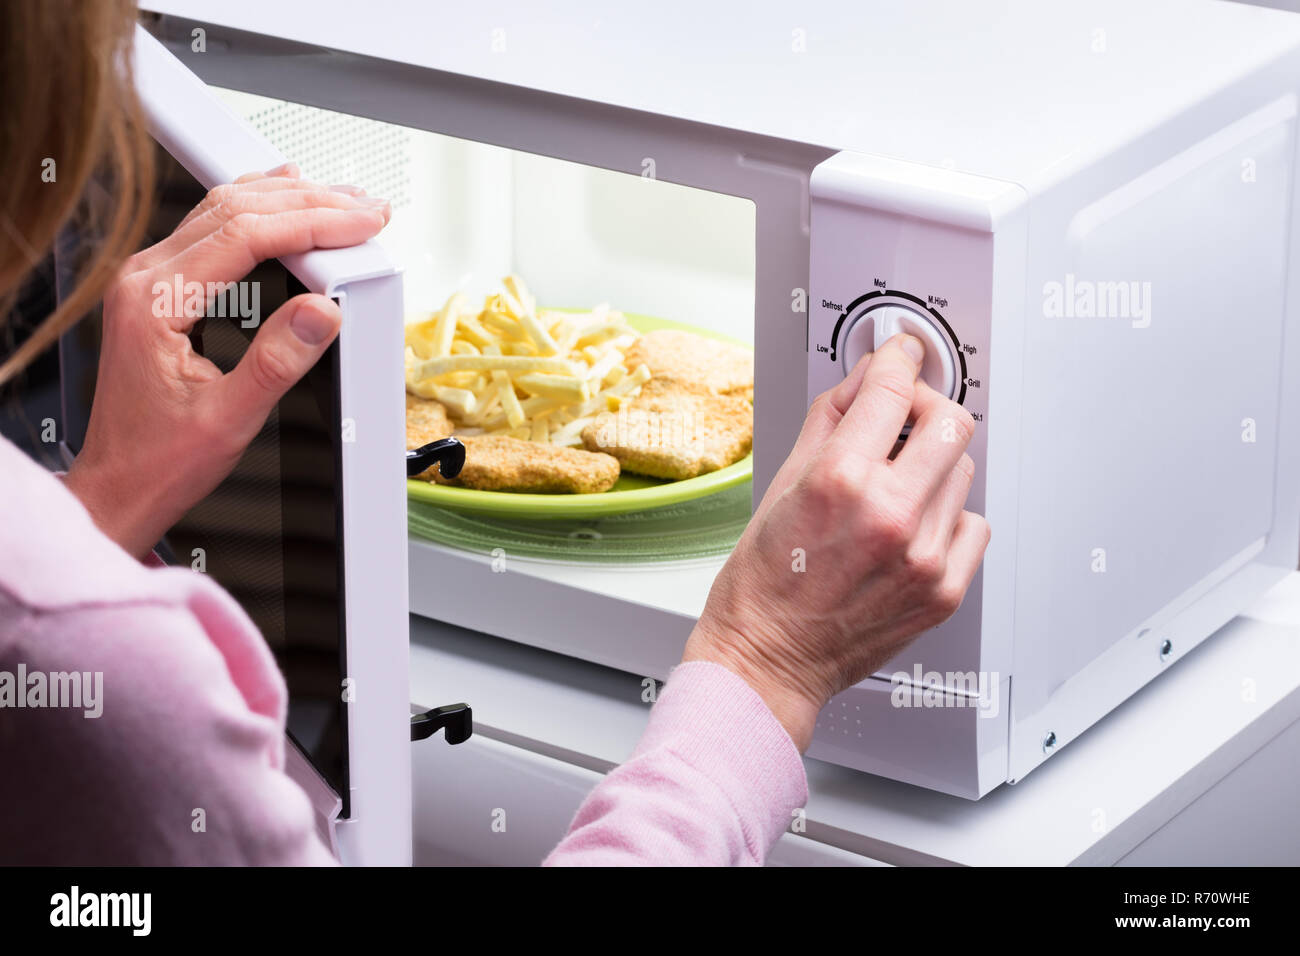 https://c8.alamy.com/comp/R70WHE/woman-heating-food-in-microwave-R70WHE.jpg